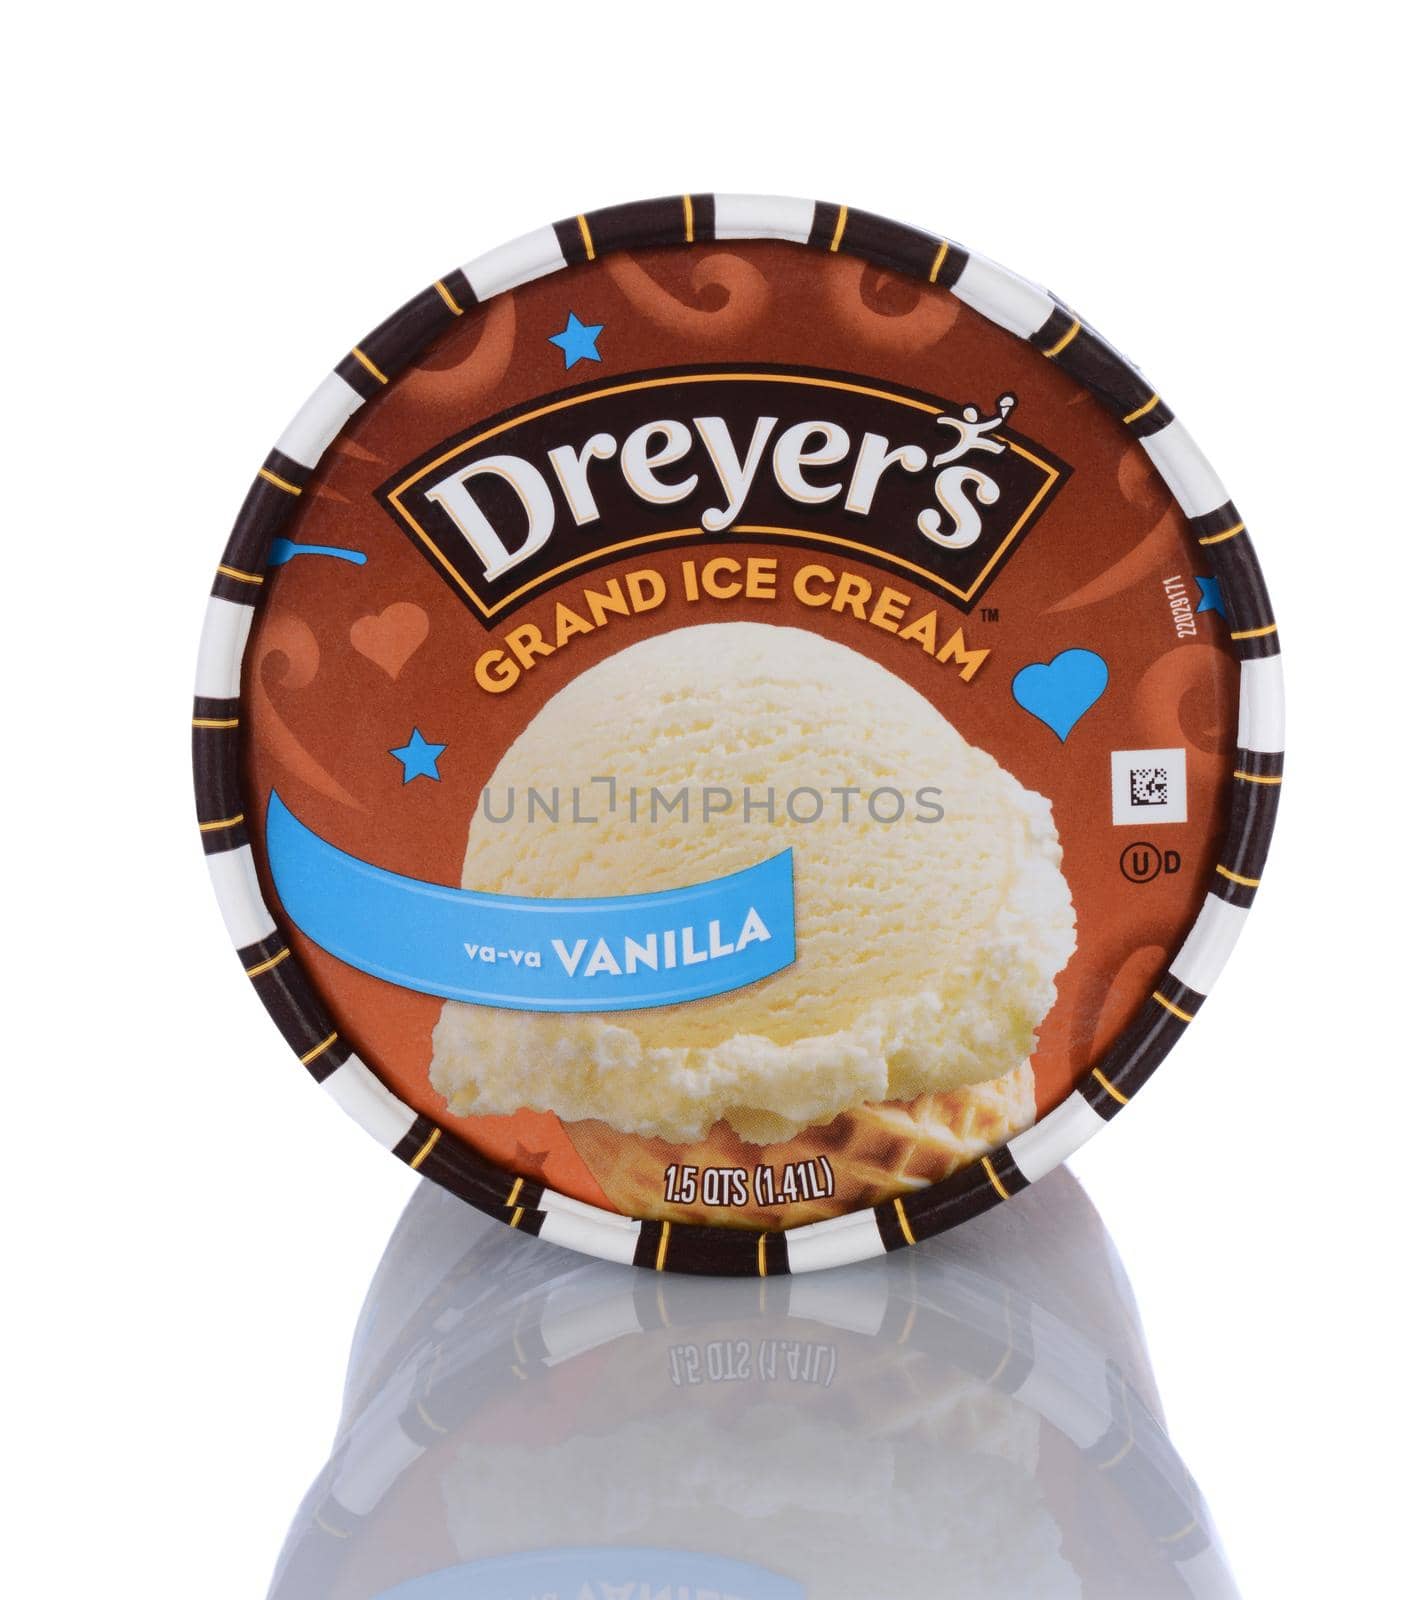 Dreyers Grand Ice Cream by sCukrov